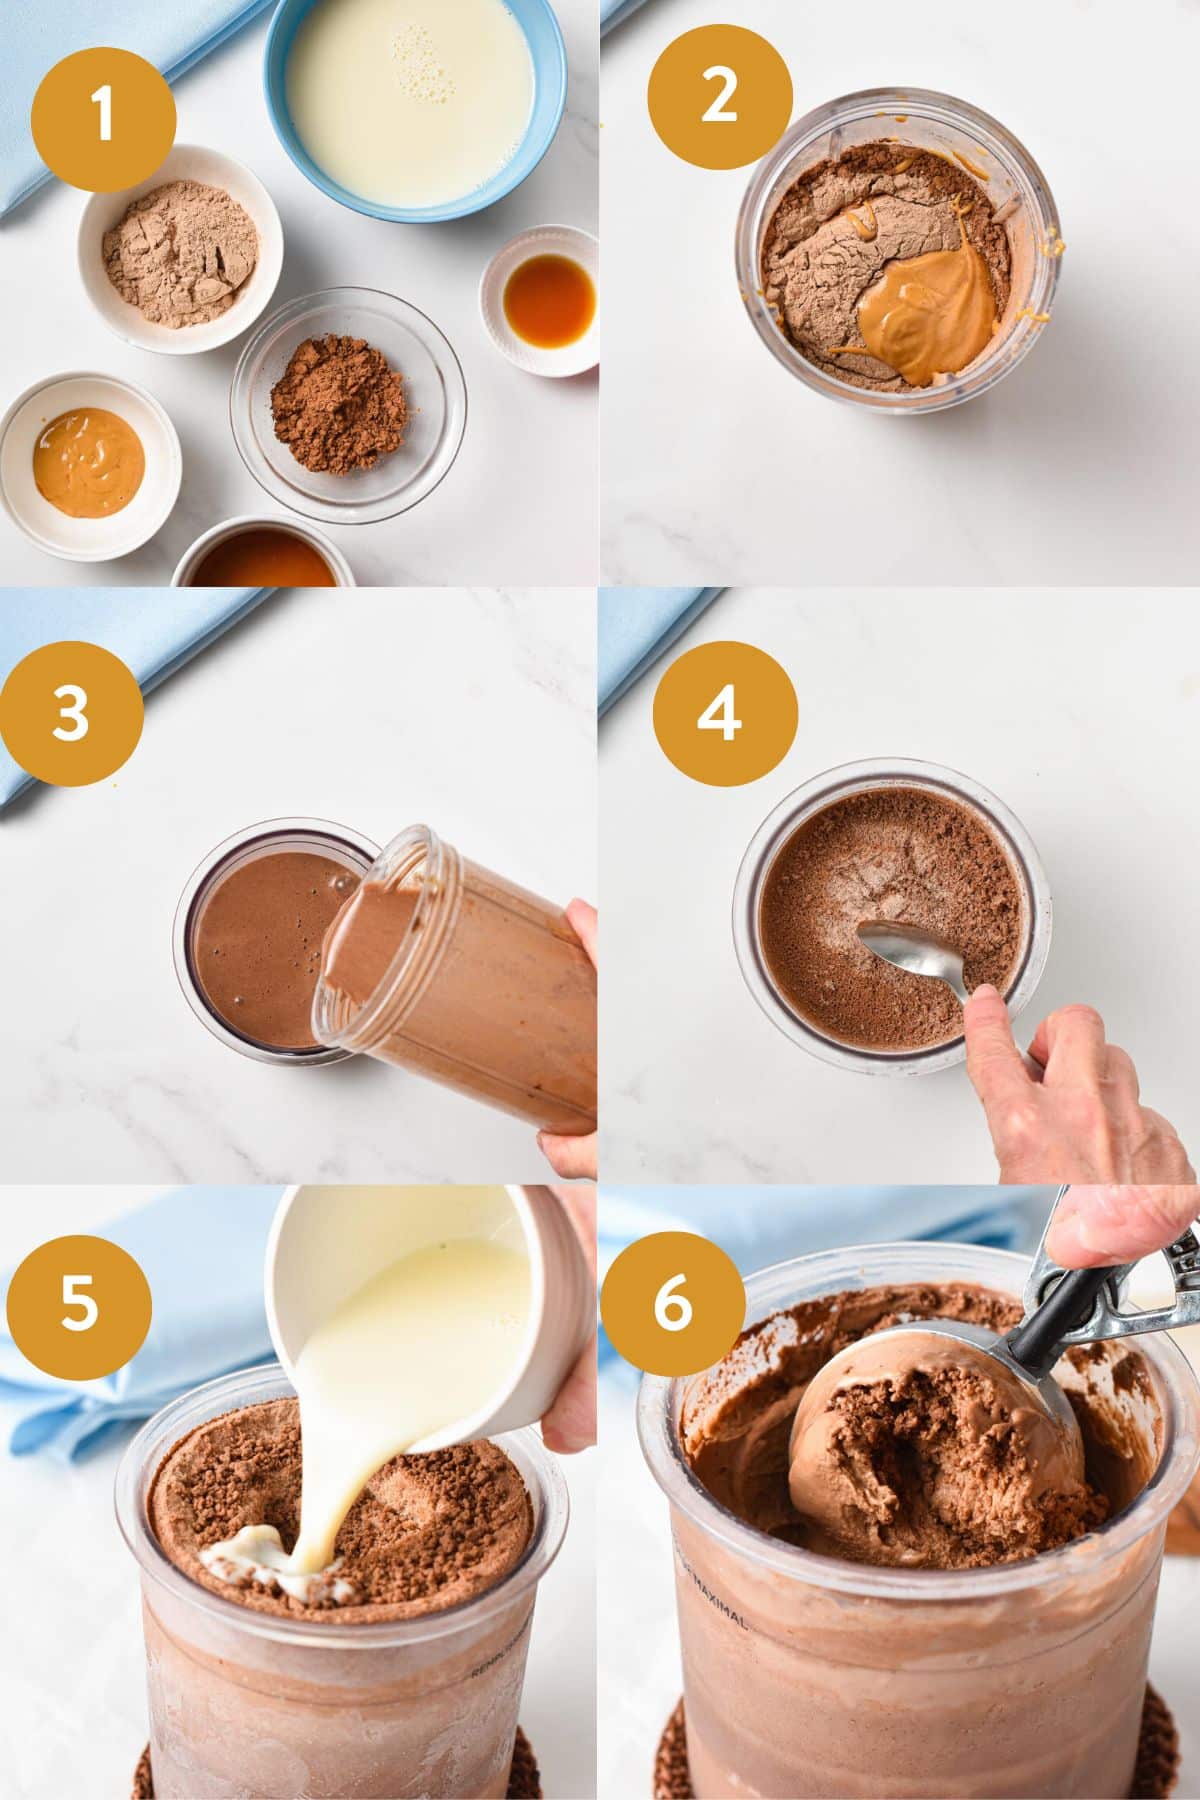 Protein Ice Cream Made with Ninja Creami – ChocZero